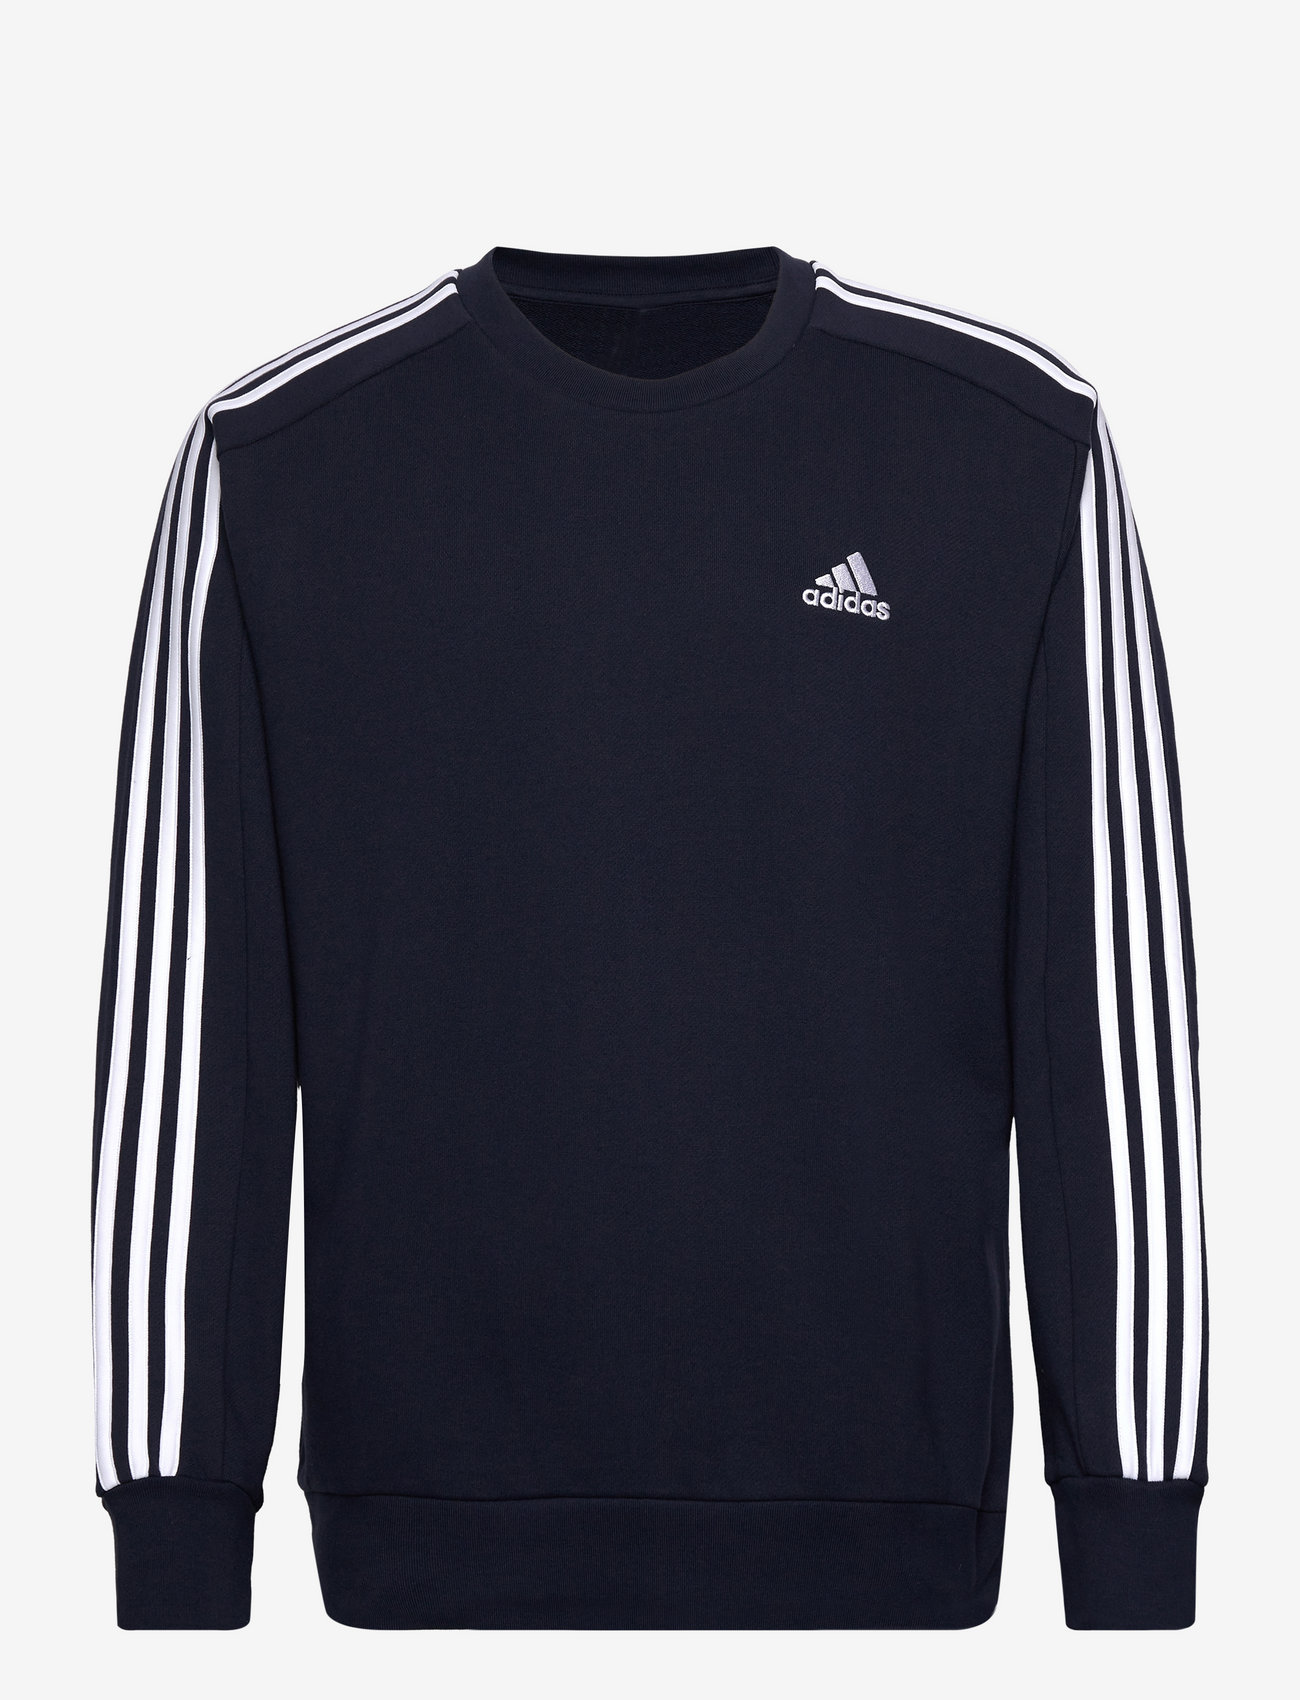 adidas Sportswear - Essentials French Terry 3-Stripes Sweatshirt - sweaters - legink - 0